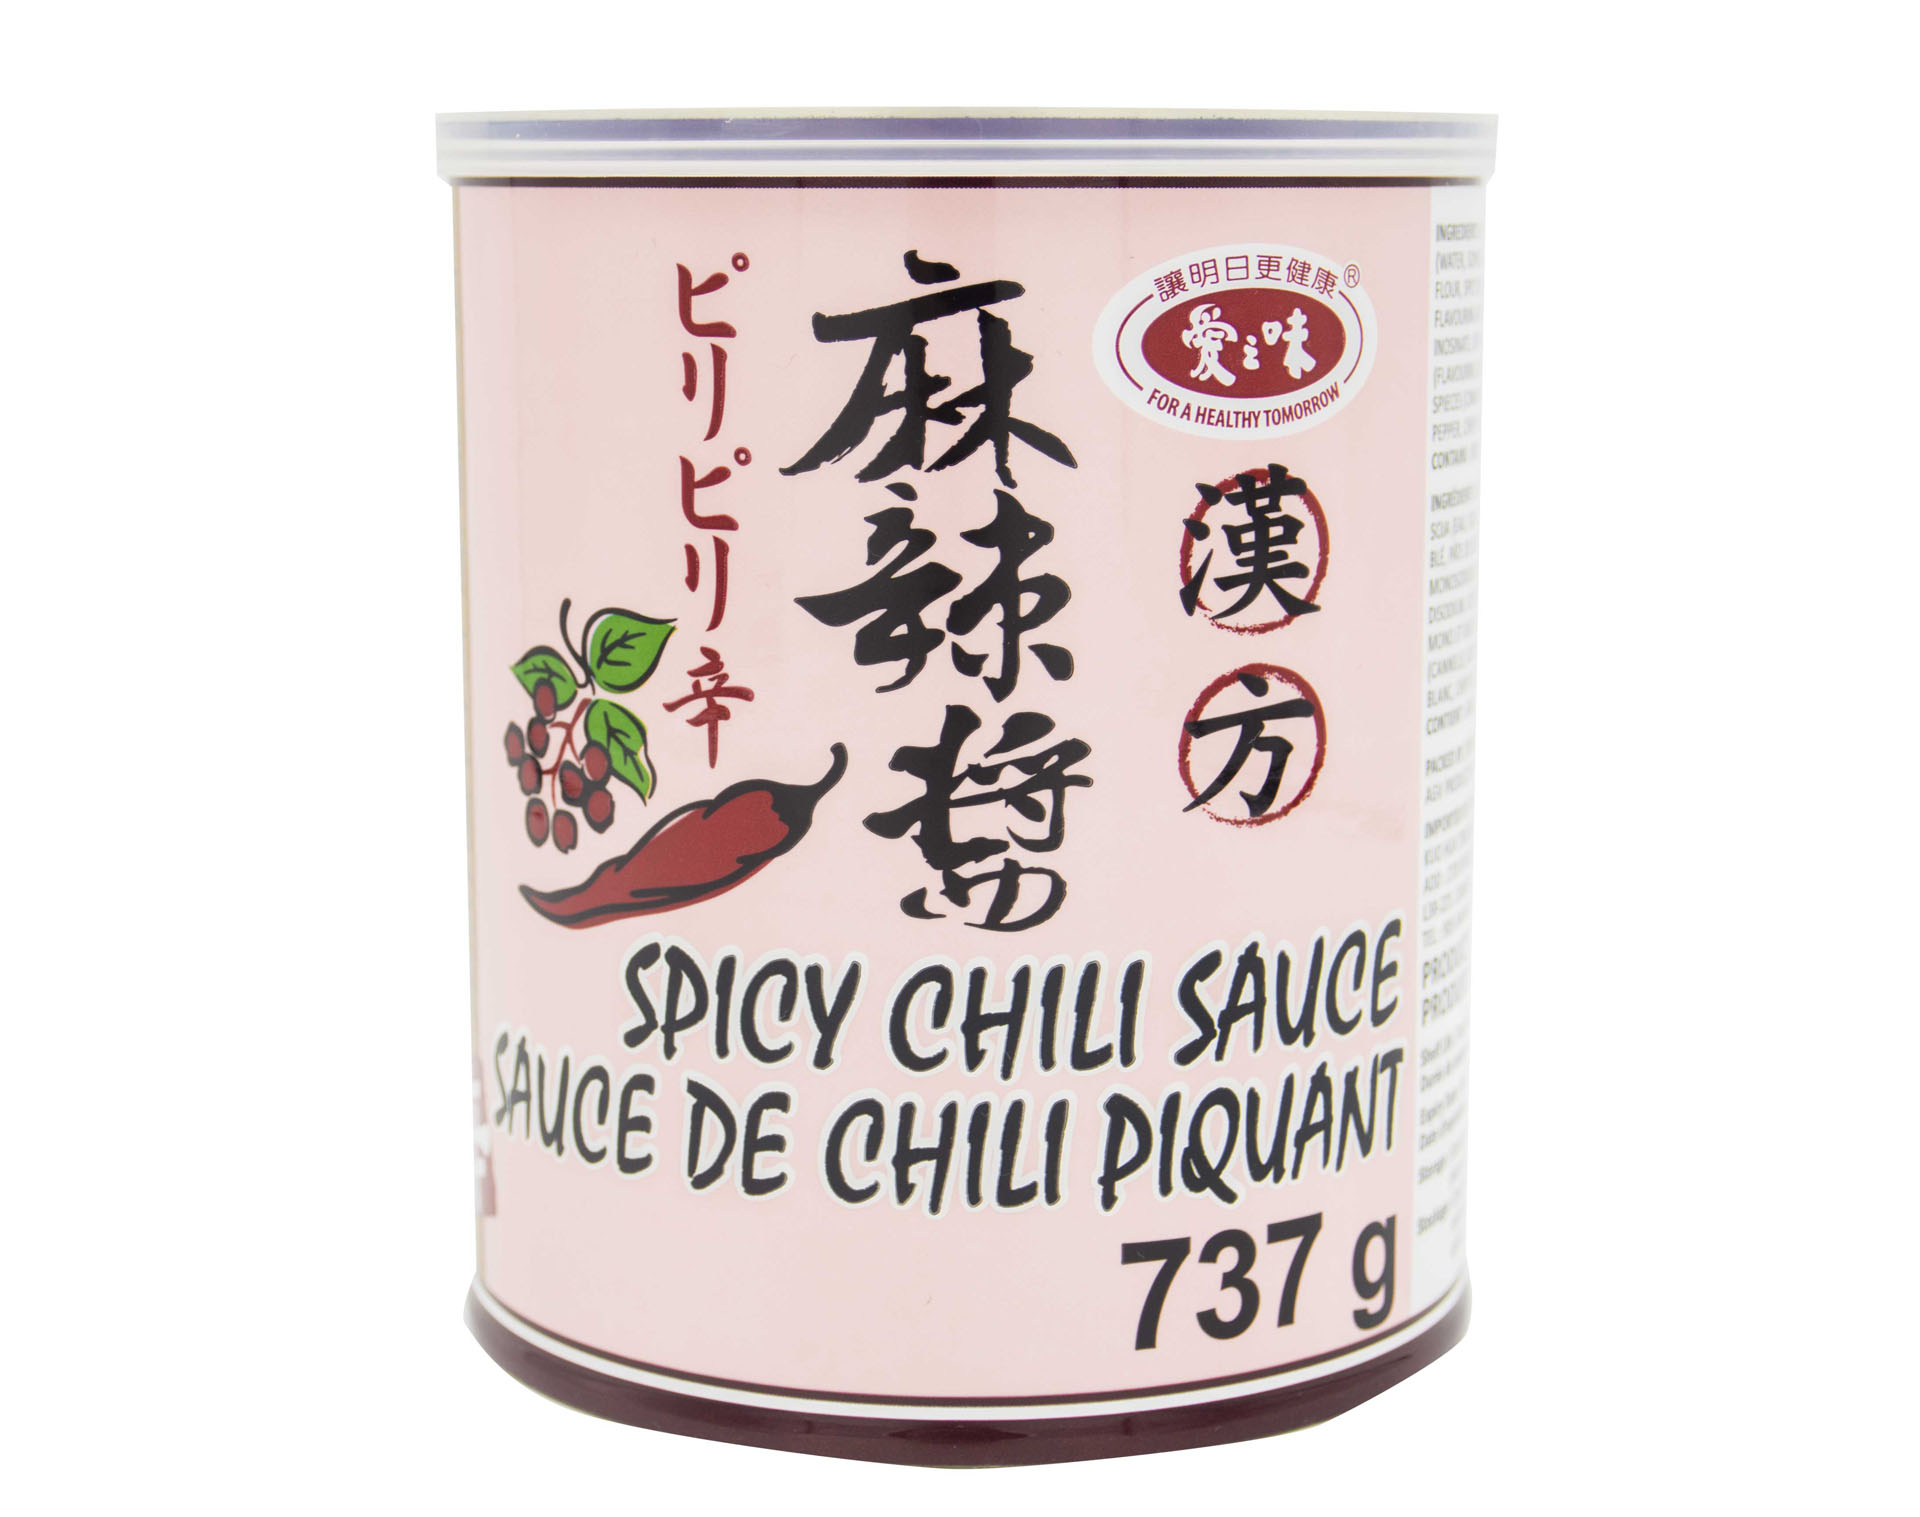 愛之味 漢方麻辣醬(大) AGV Spicy Chili Sauce